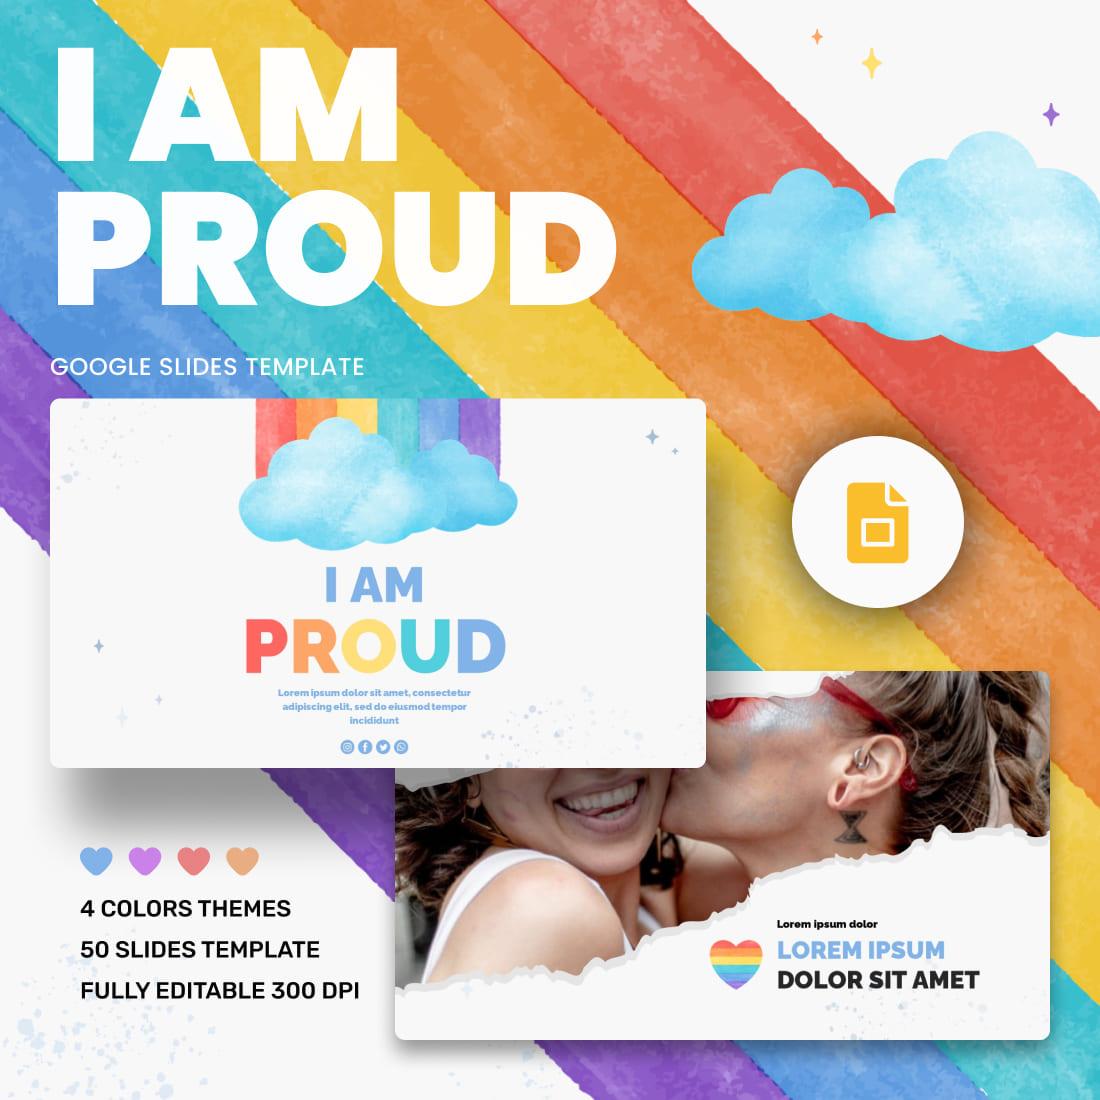 I'm Proud LGBTQ Google Slides Theme.